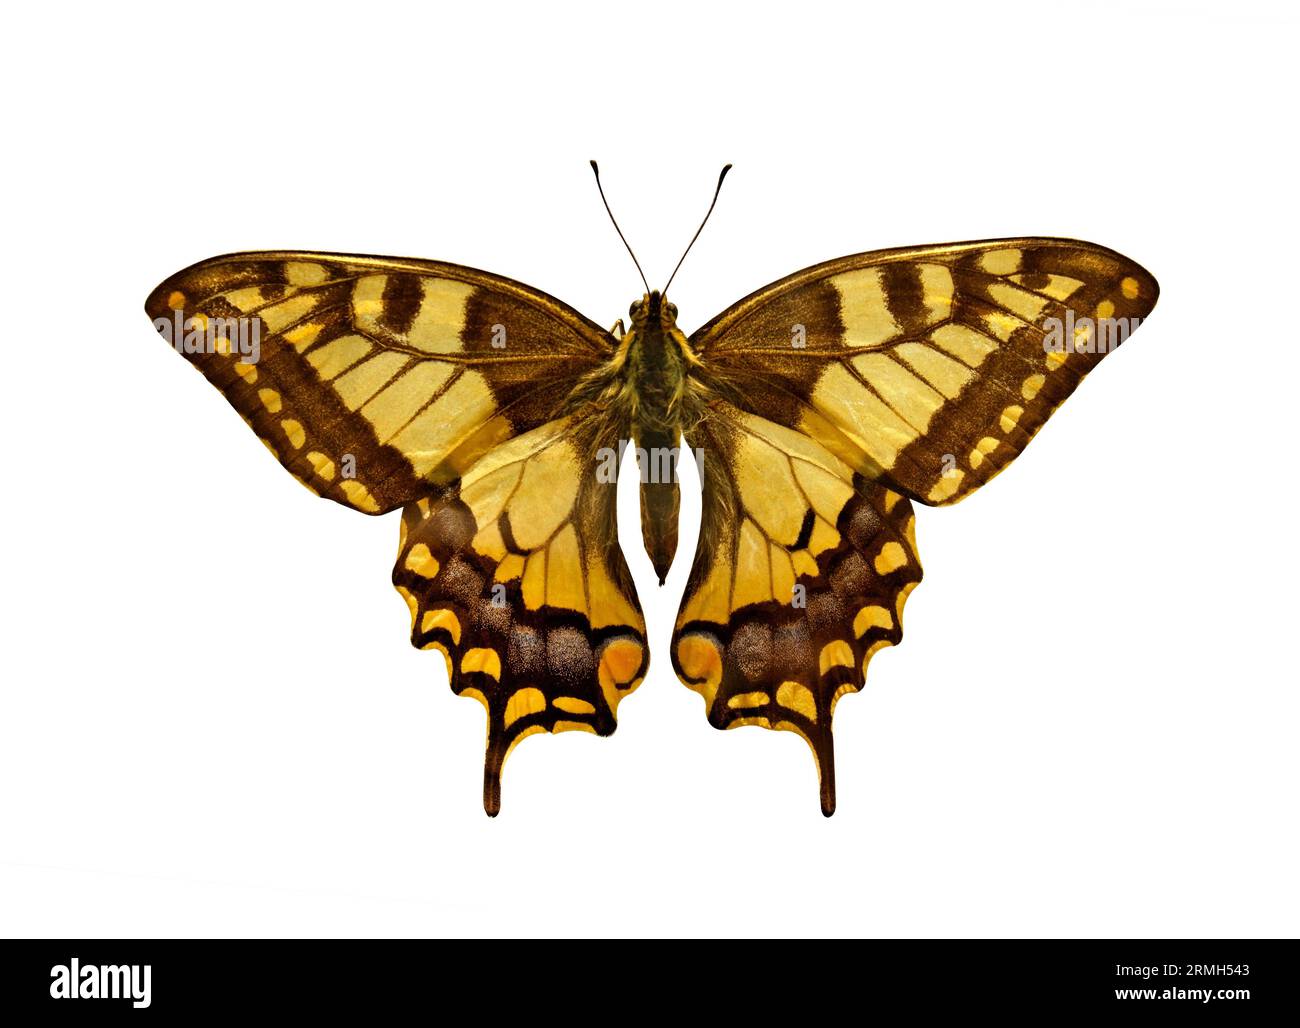 Viejo mundo Swallowtail Butterfly (Papilio Machaon), aislado en blanco. Objeto con ruta de recorte. Foto de stock